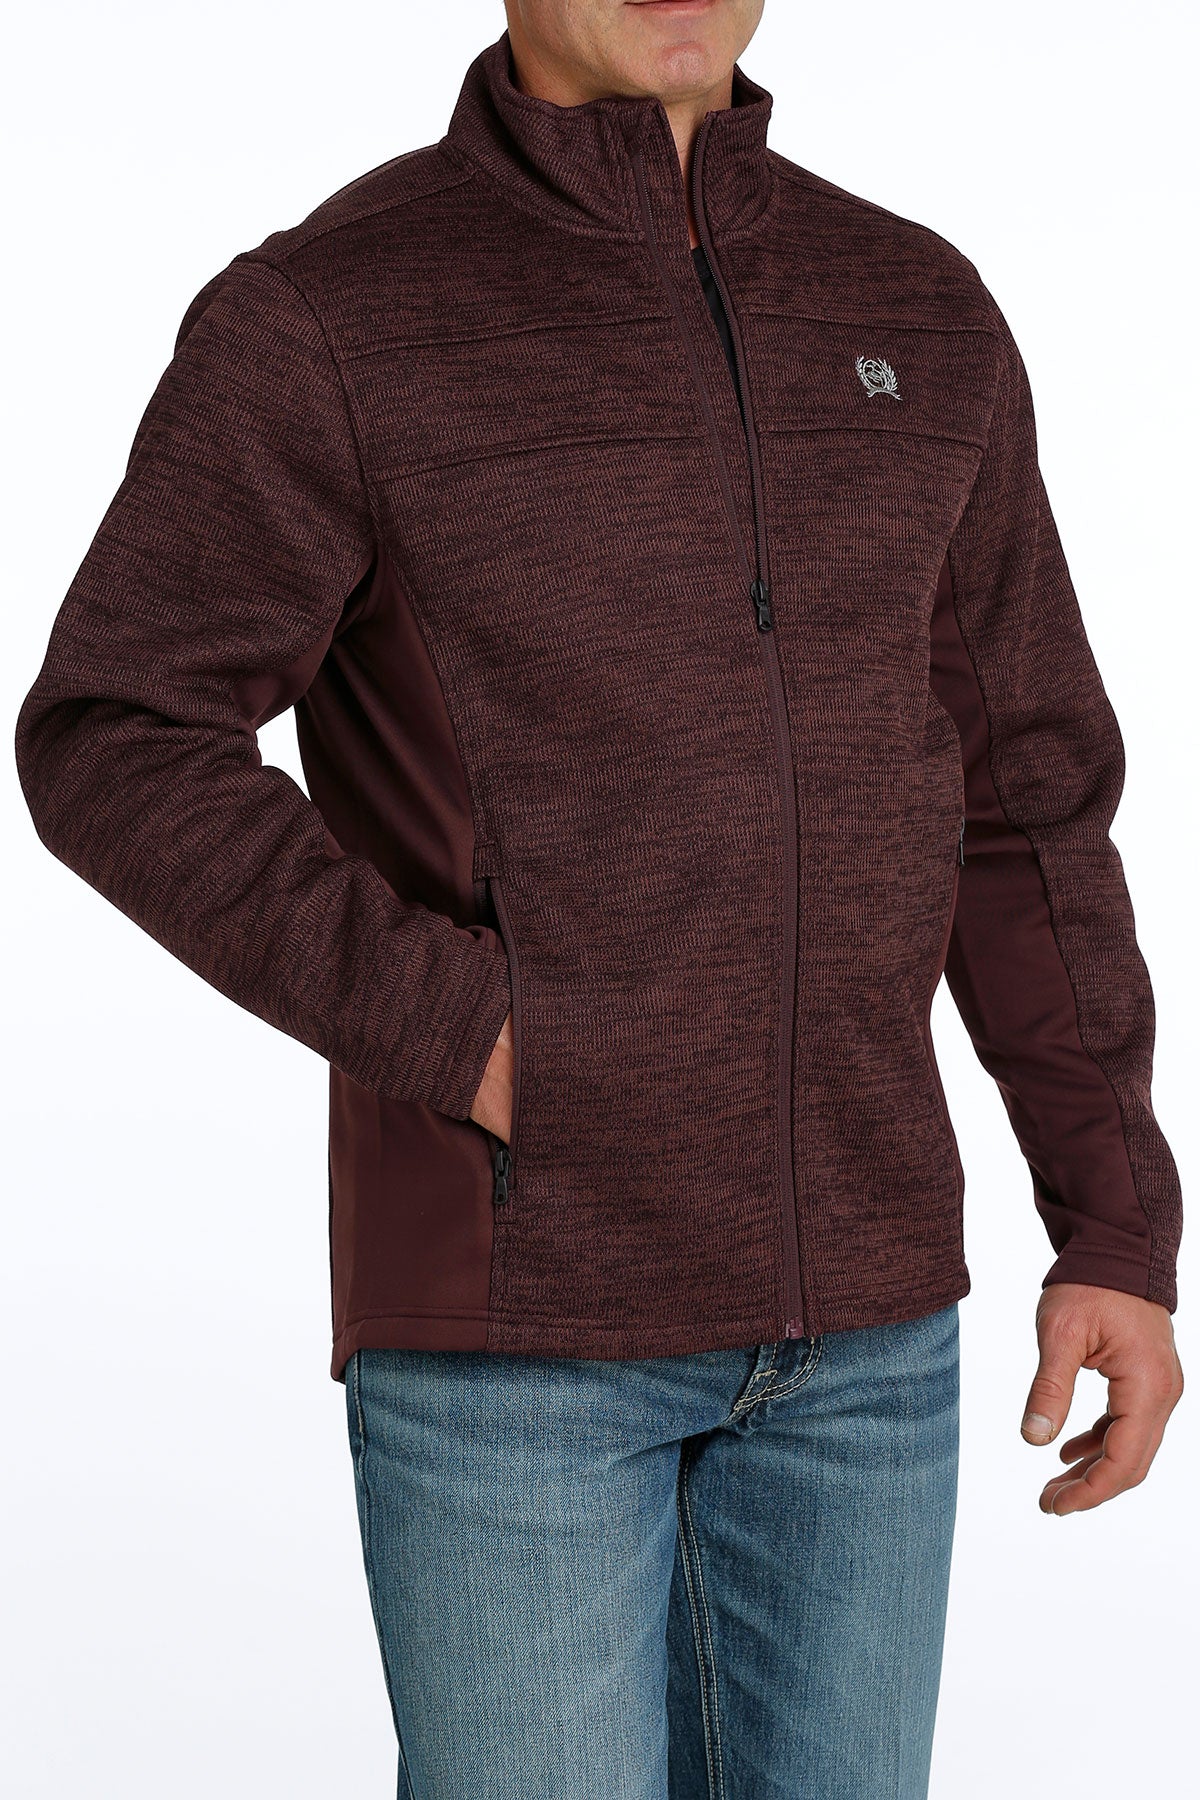 CINCH Men's Sweater Jacket- Burgundy